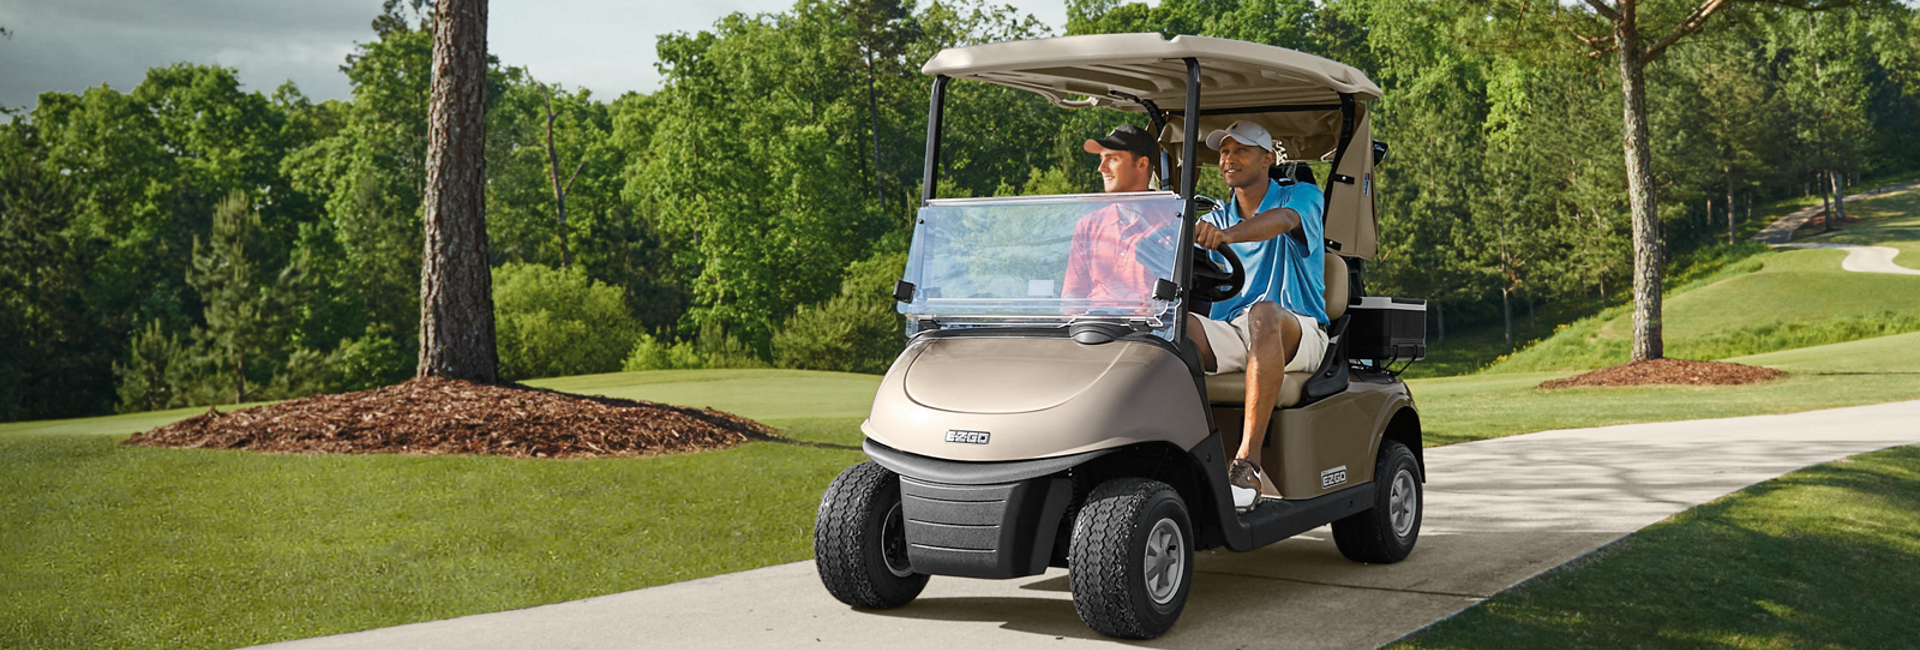 Augusta Golf Cars E-Z-GO RXV